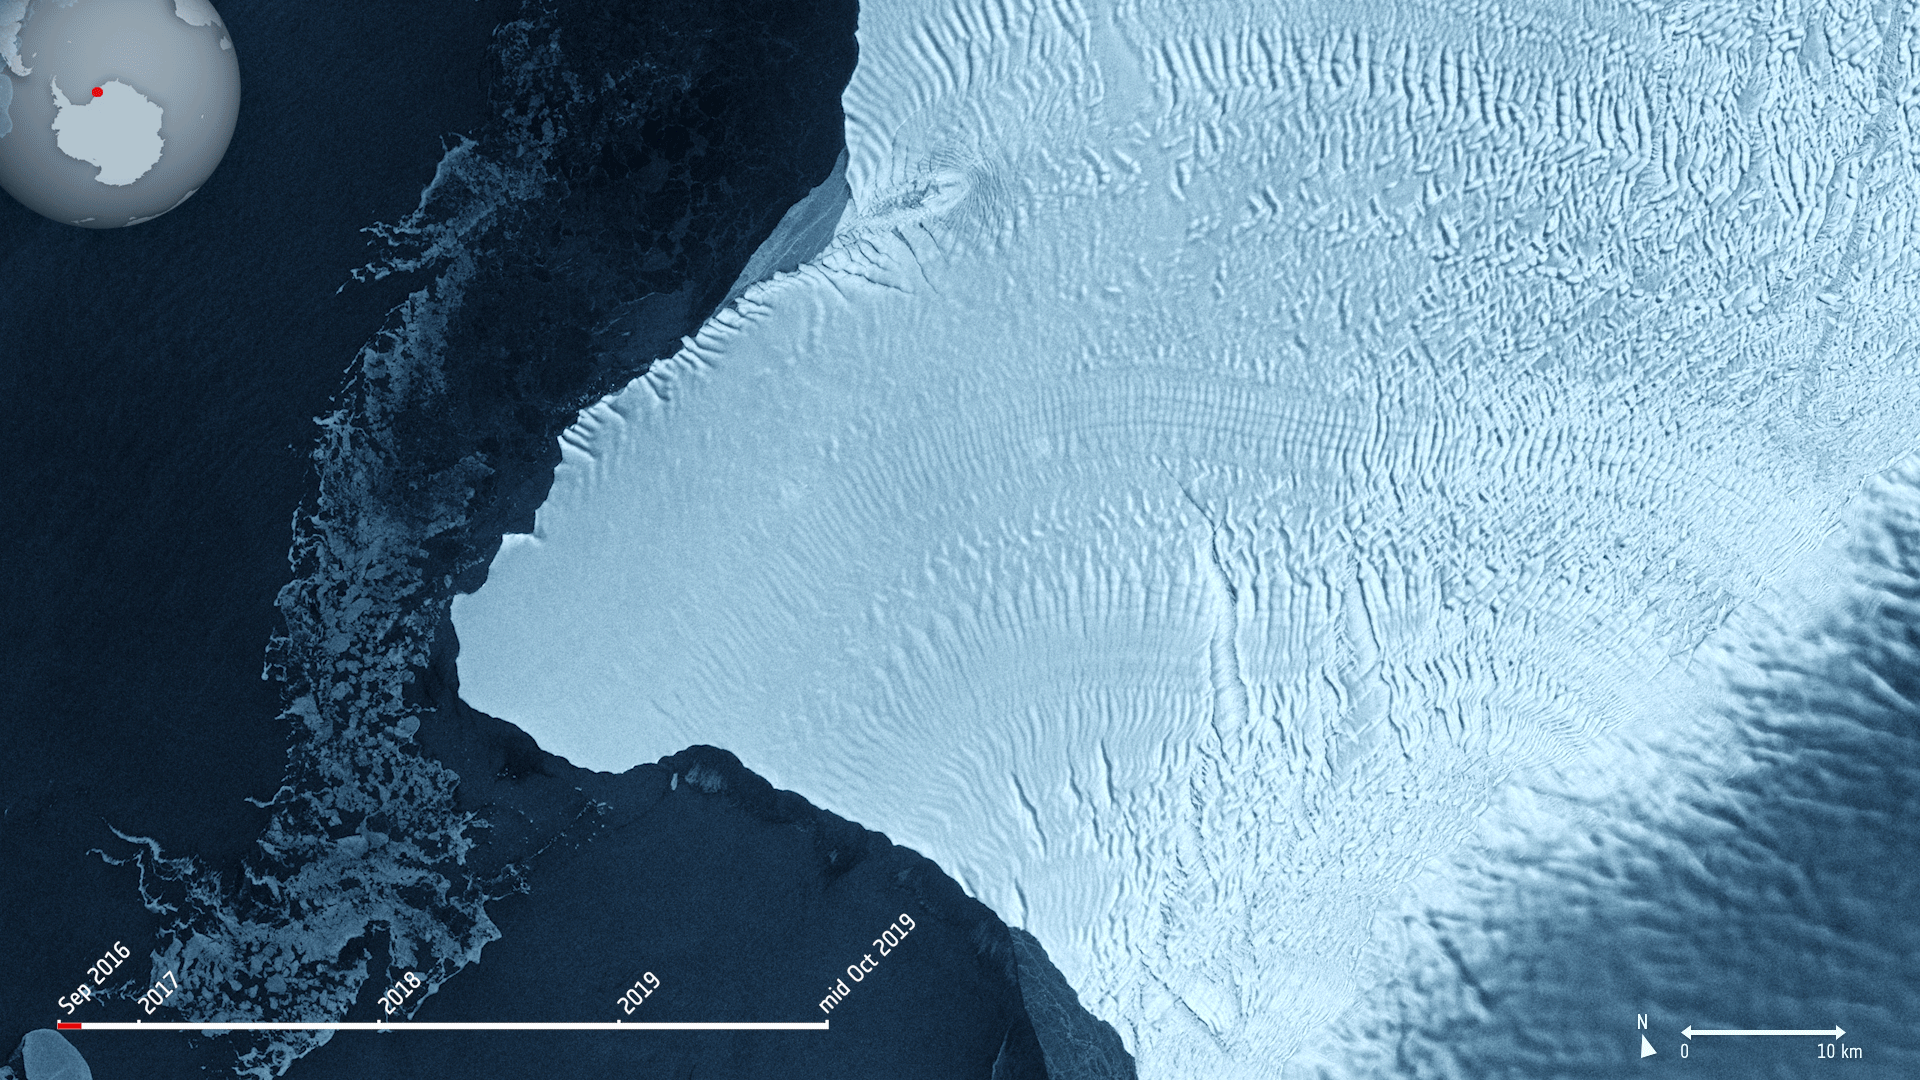 Cracks in the Brunt ice shelf, Antarctica